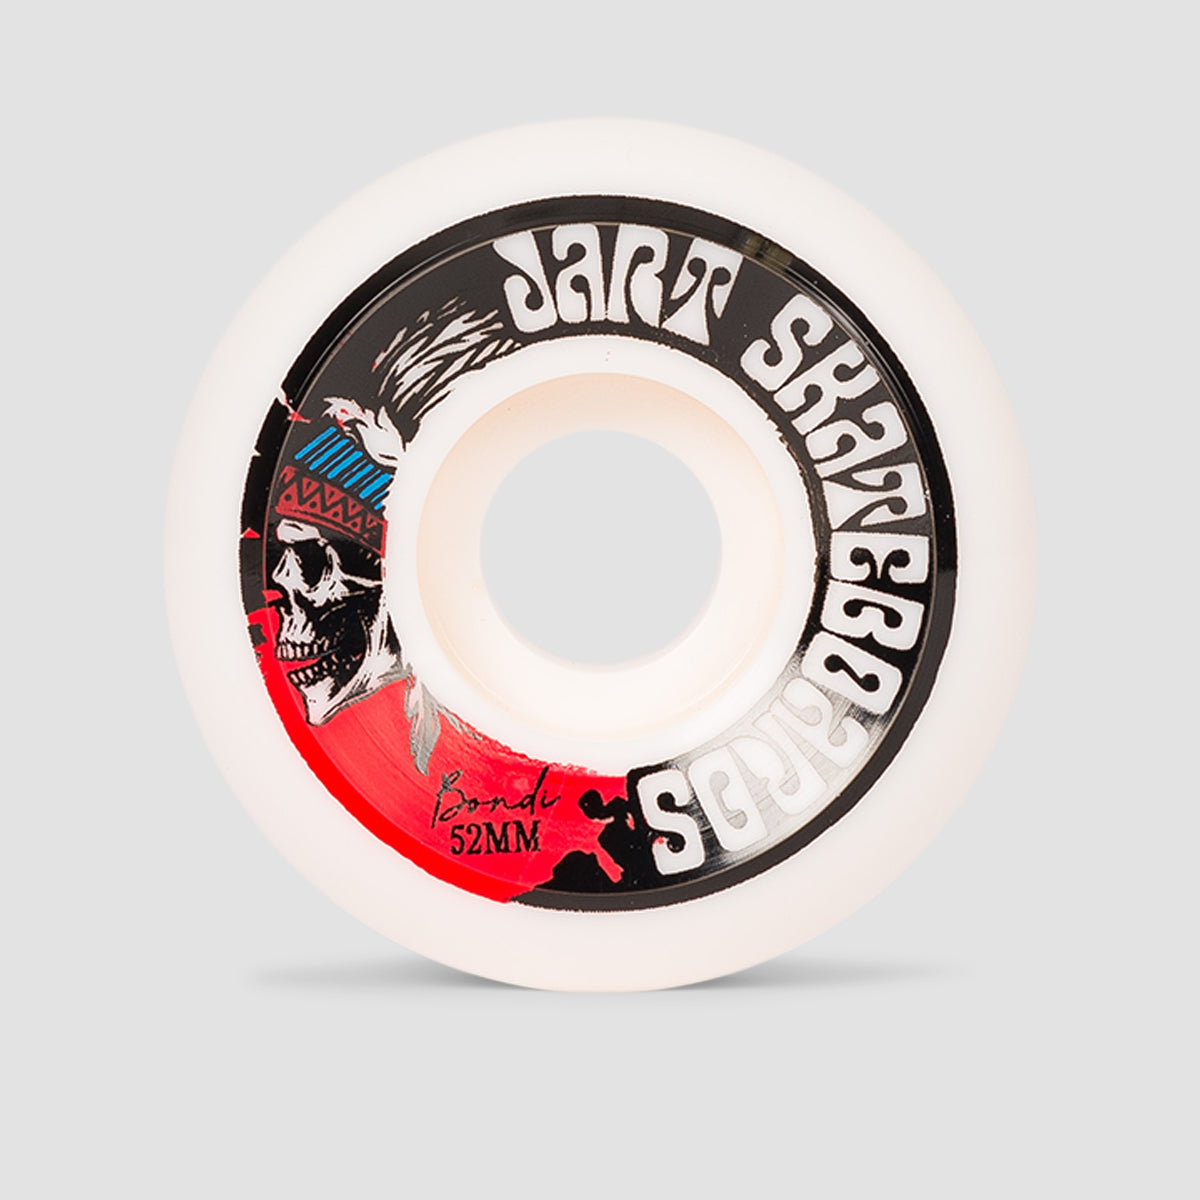 Jart Bondi 83B Skateboard Wheels 52mm